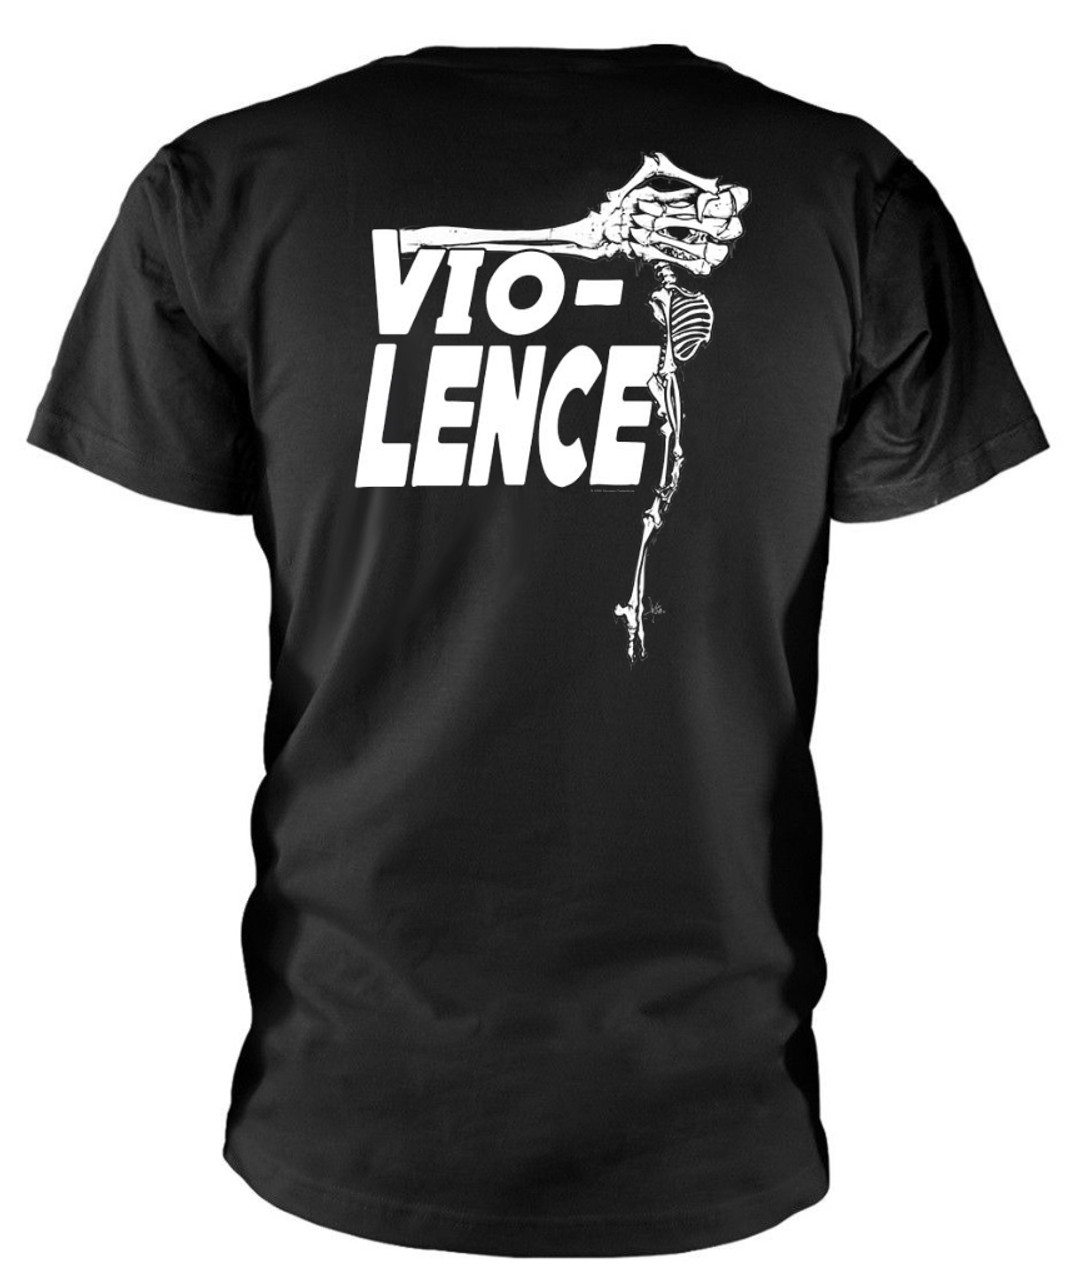 Vio-lence 'Vio Dude' (Black) T-Shirt